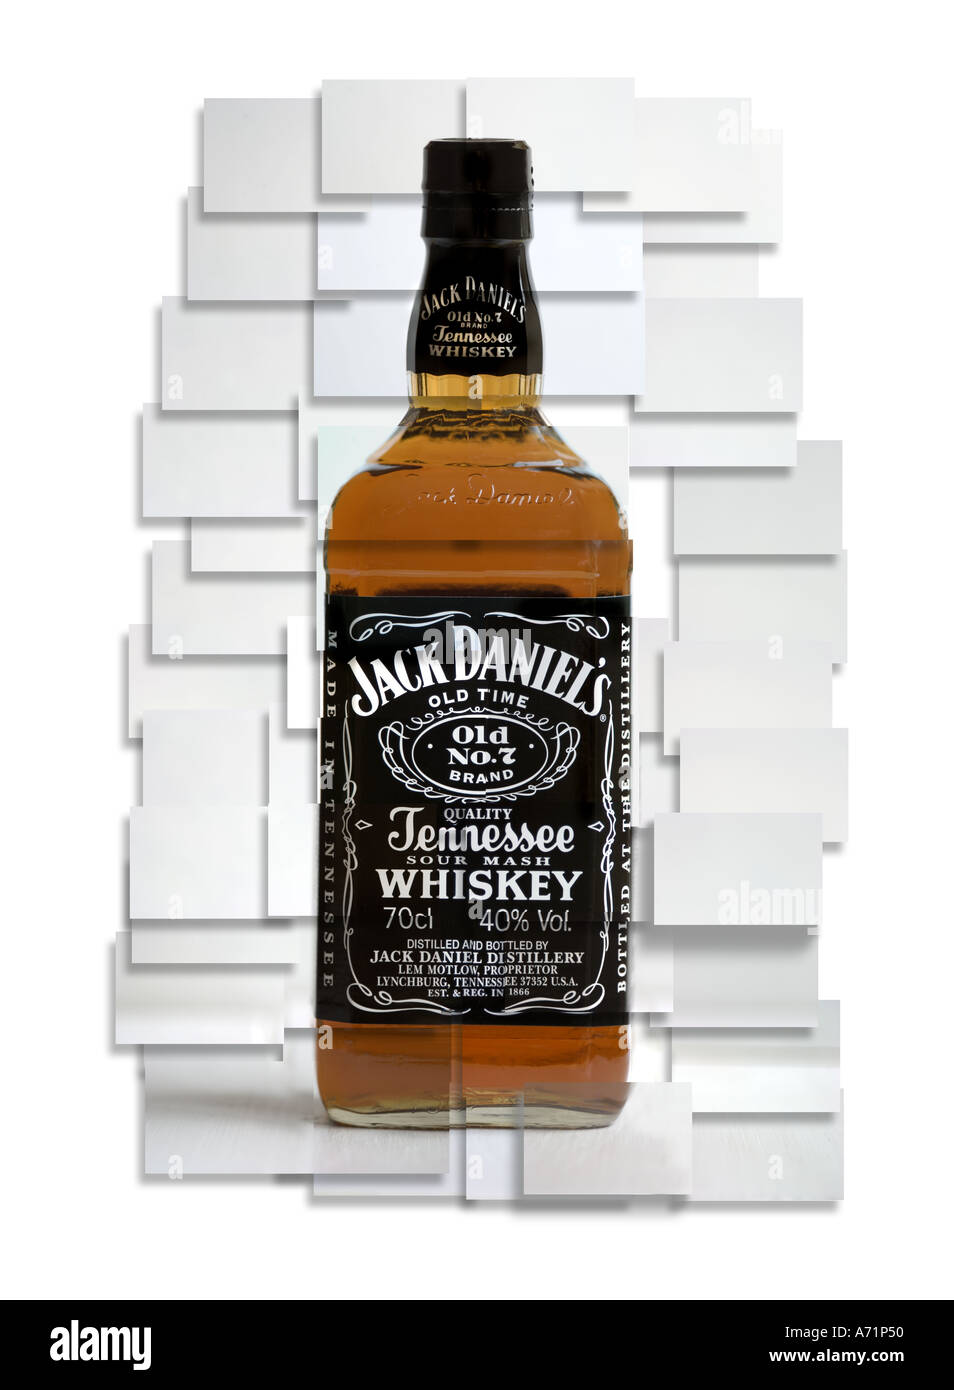 Jack Daniel's creates bottle with McLaren - The Spirits Business